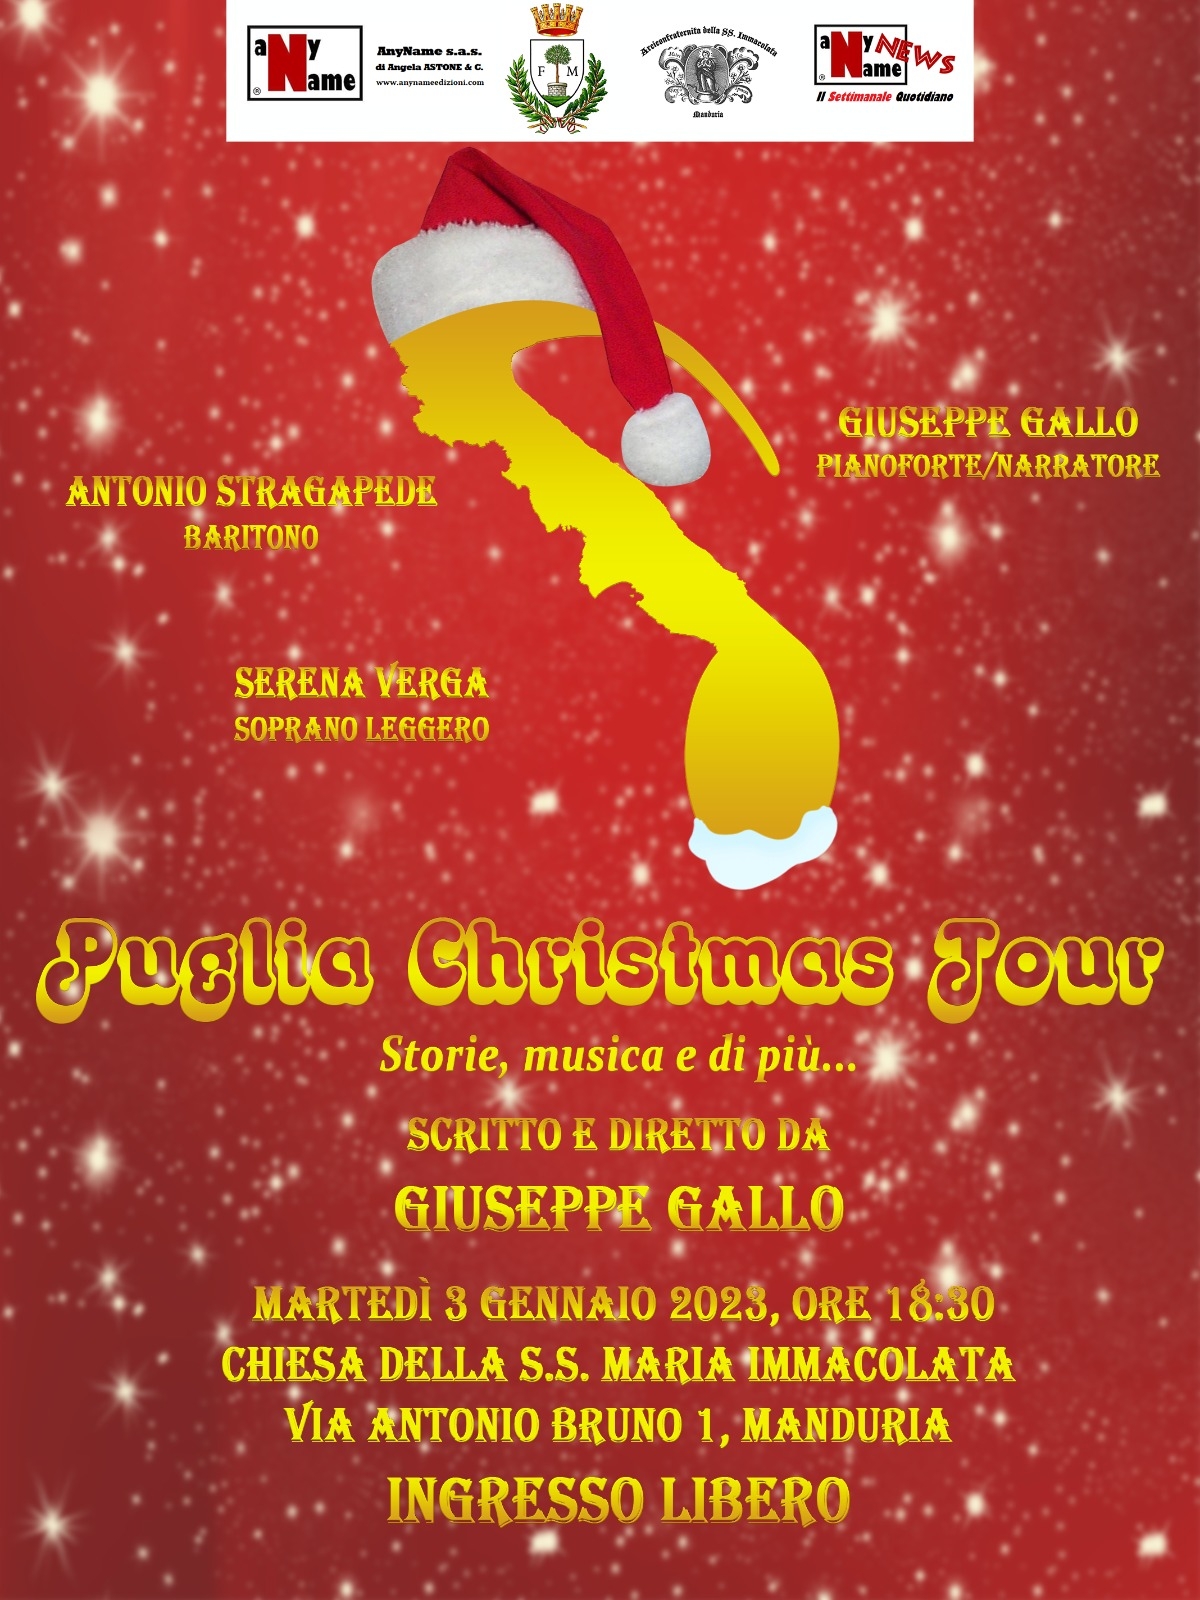 Il 3 gennaio, a Manduria, arriva il “Puglia Christmas Tour”